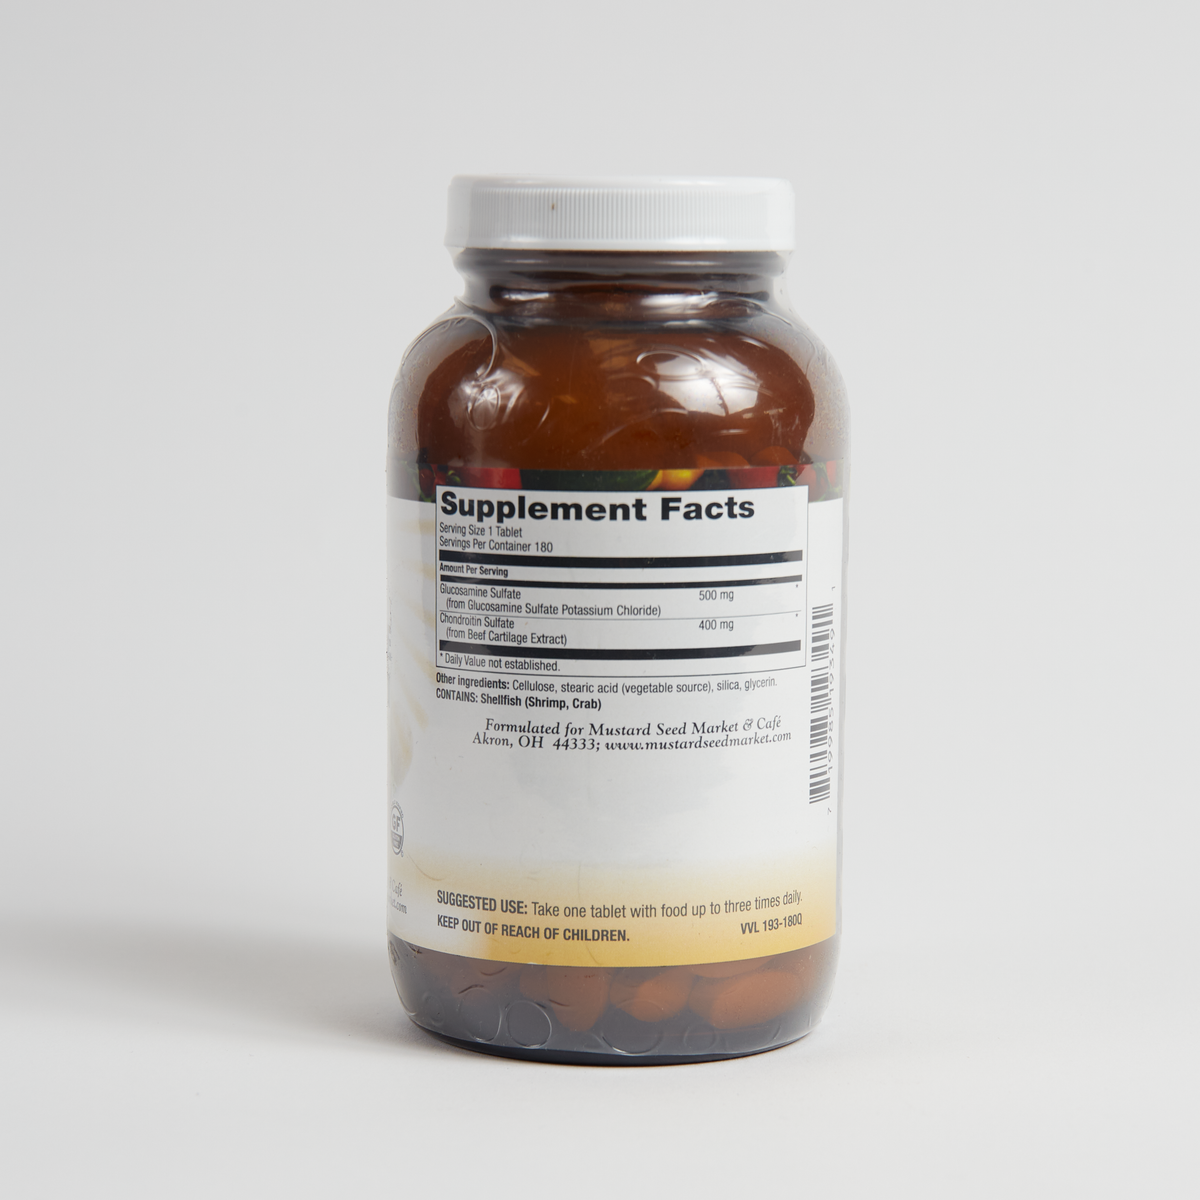 Mustard Seed Market Glucosamine Chondroitin - 180 Count